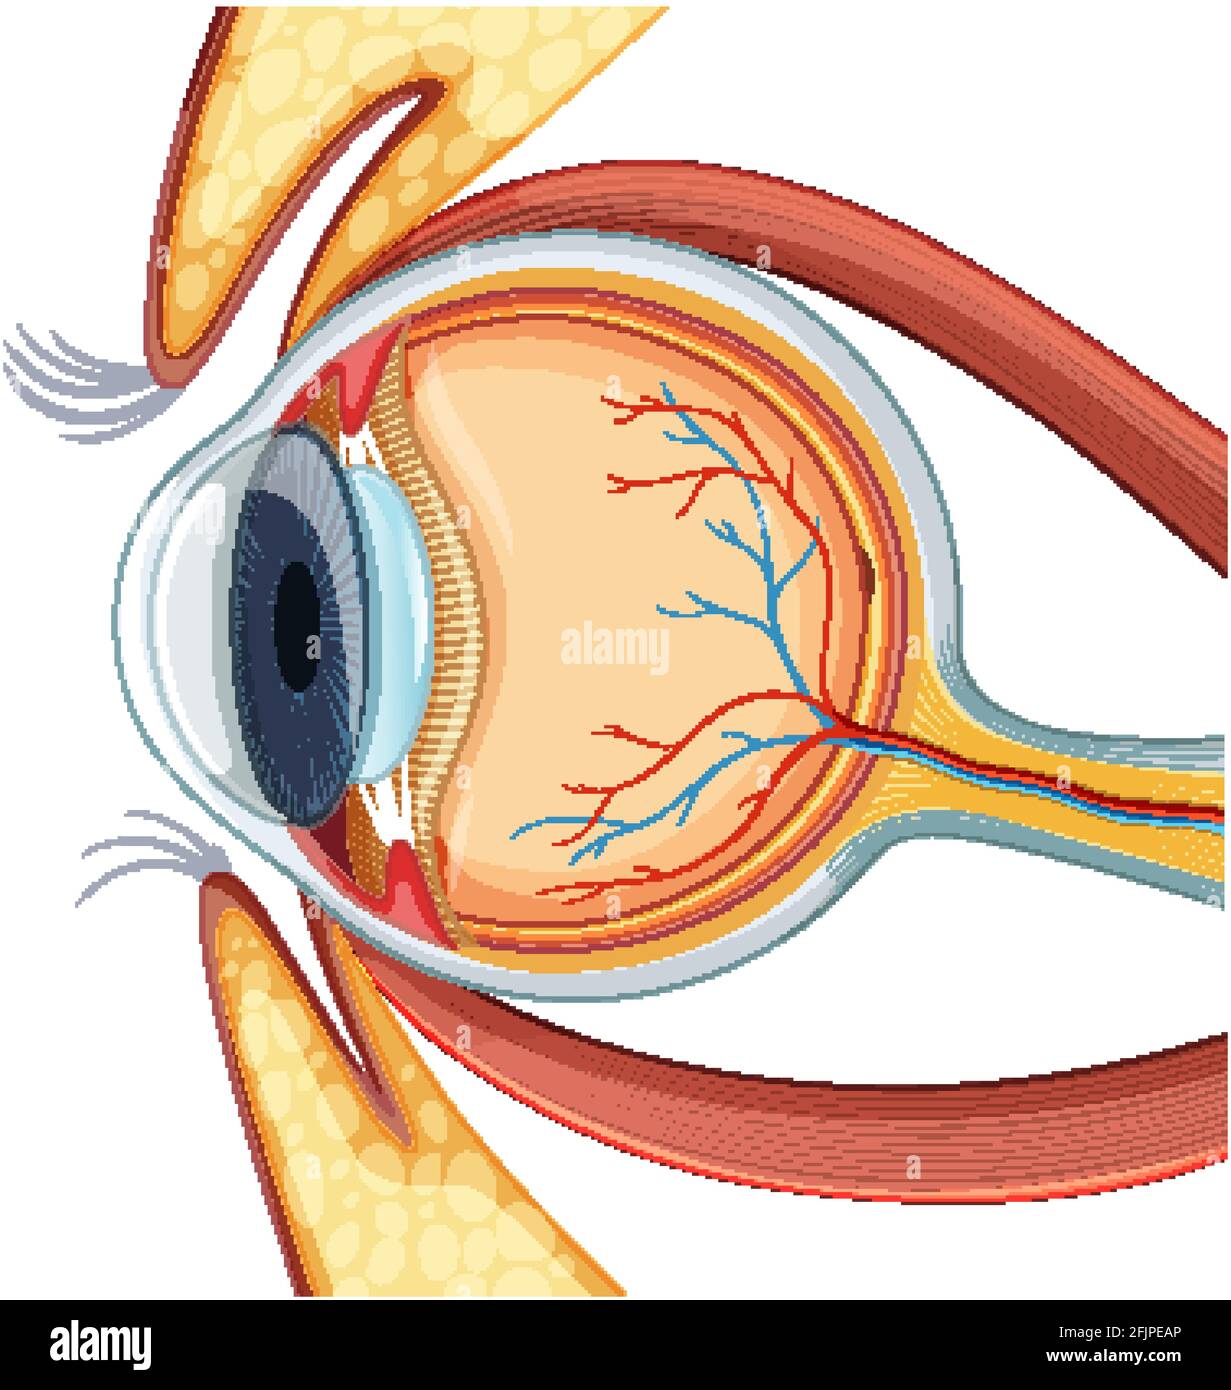 Diagram of human eyeball anatomy illustration Stock Vector